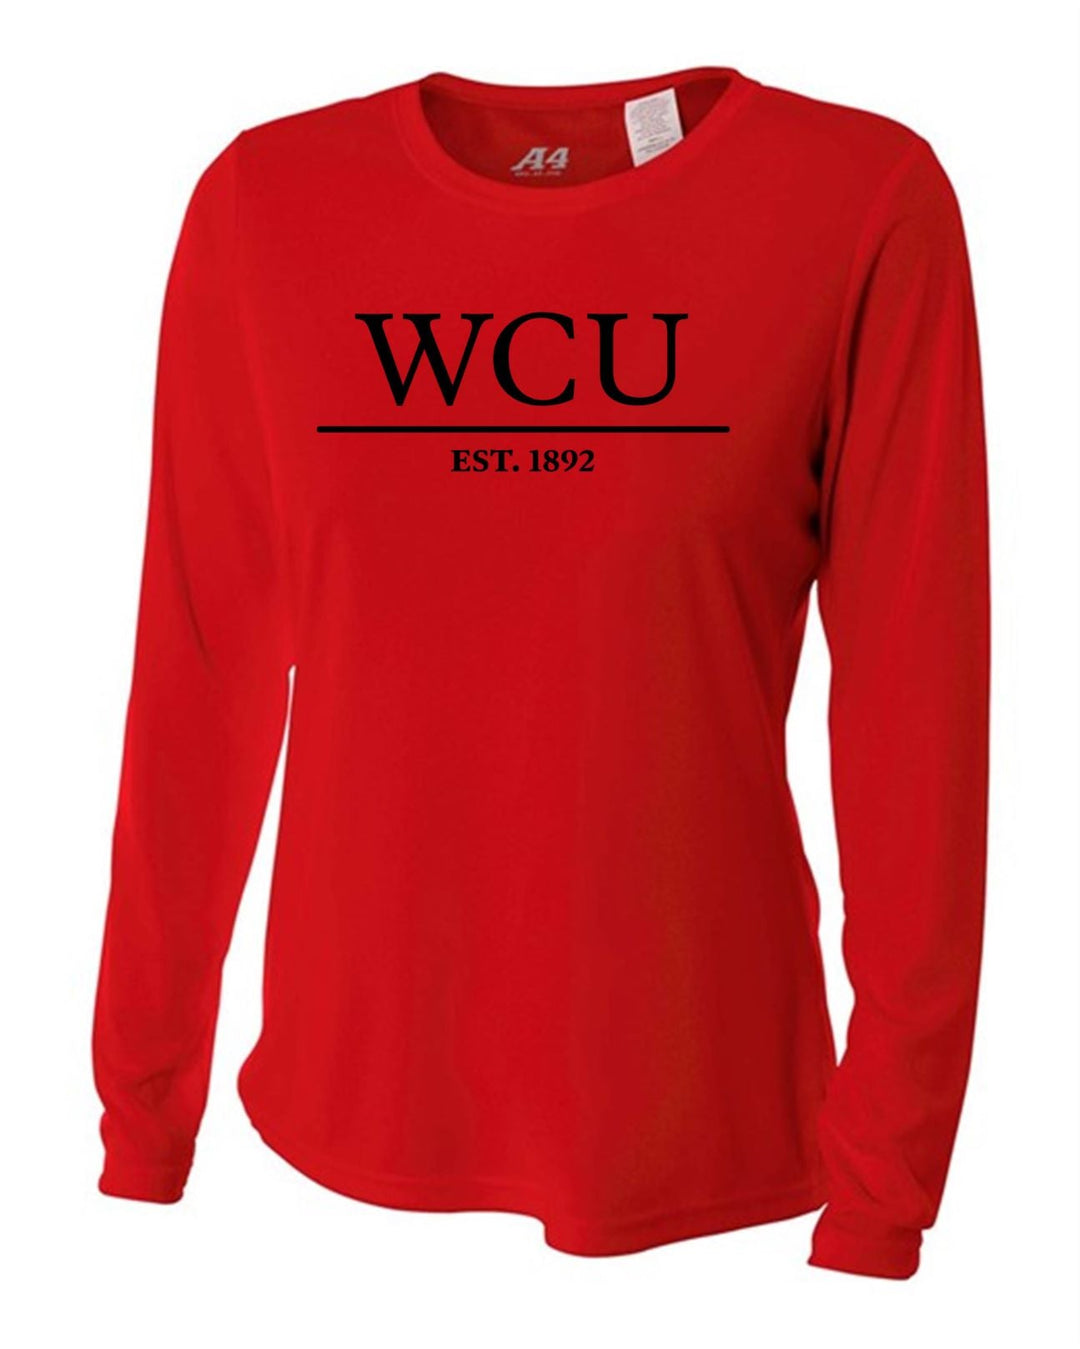 WCU Baton Rouge Women's Long-Sleeve Performance Shirt WCU BR Red Womens Small - Third Coast Soccer